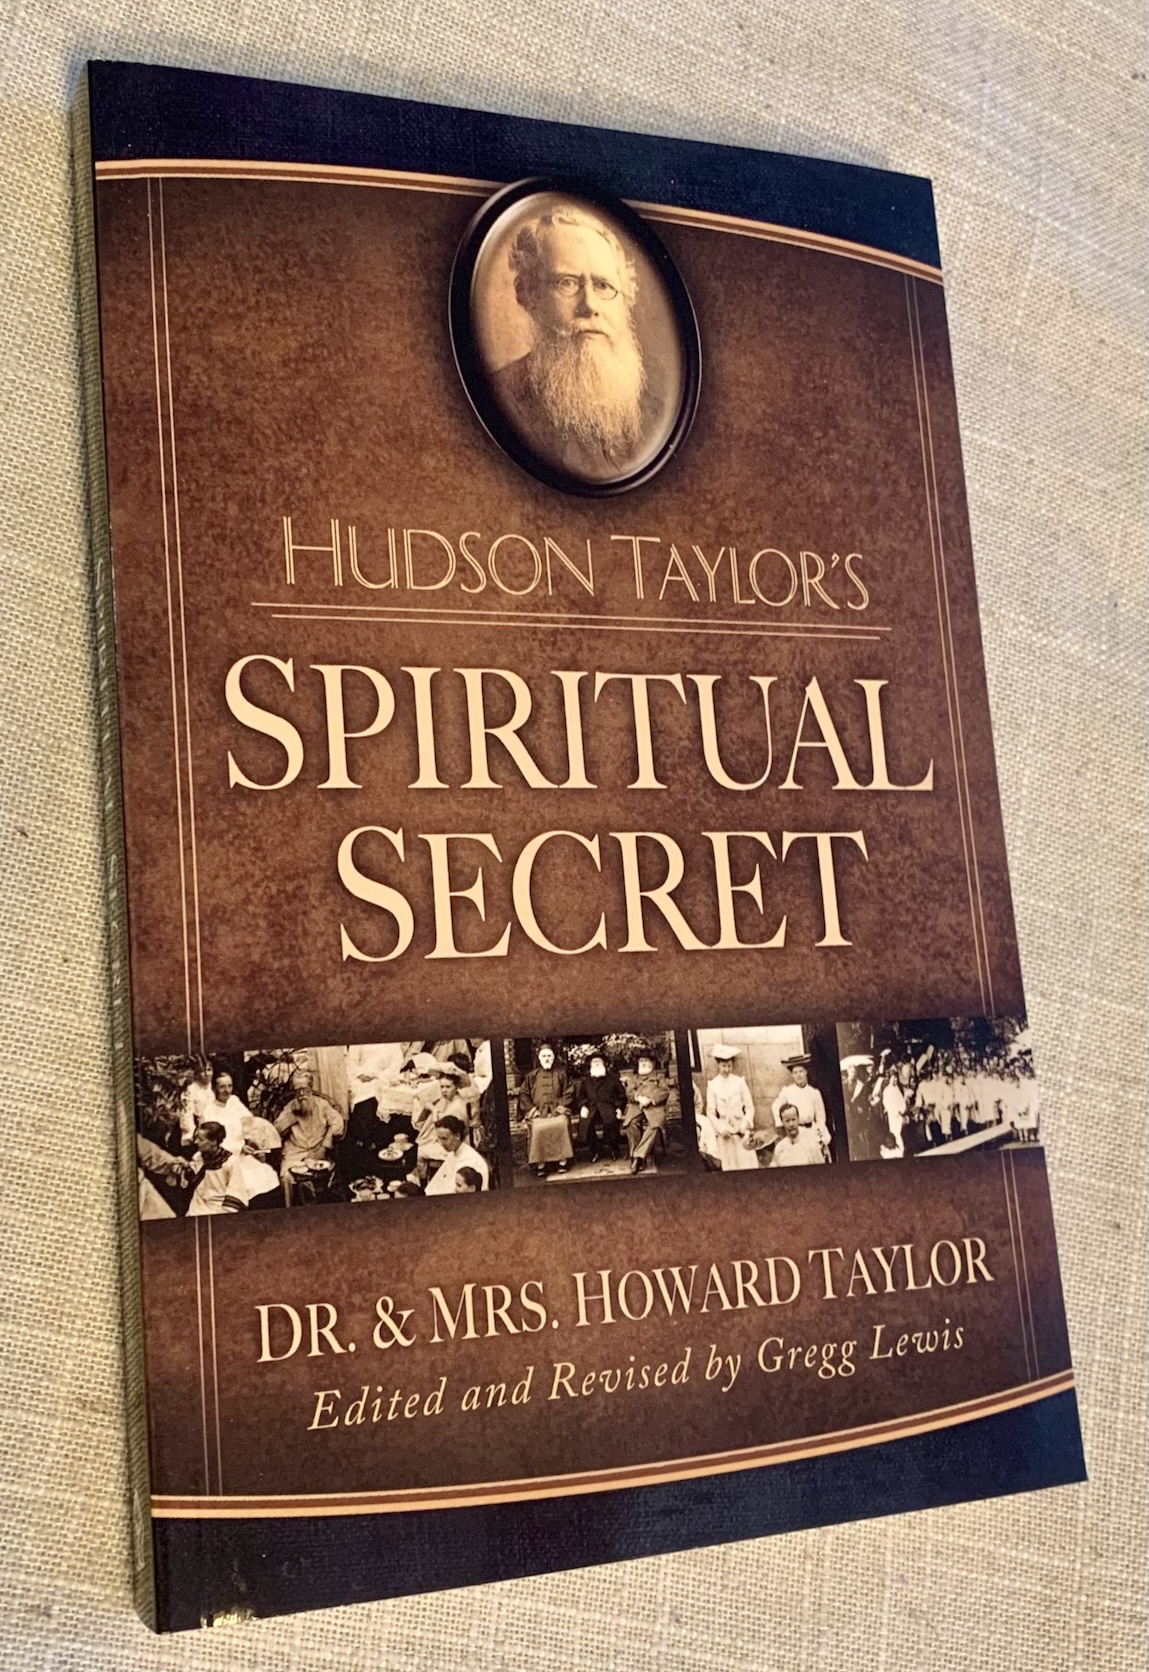 Hudson Taylor's Spiritual Secret book